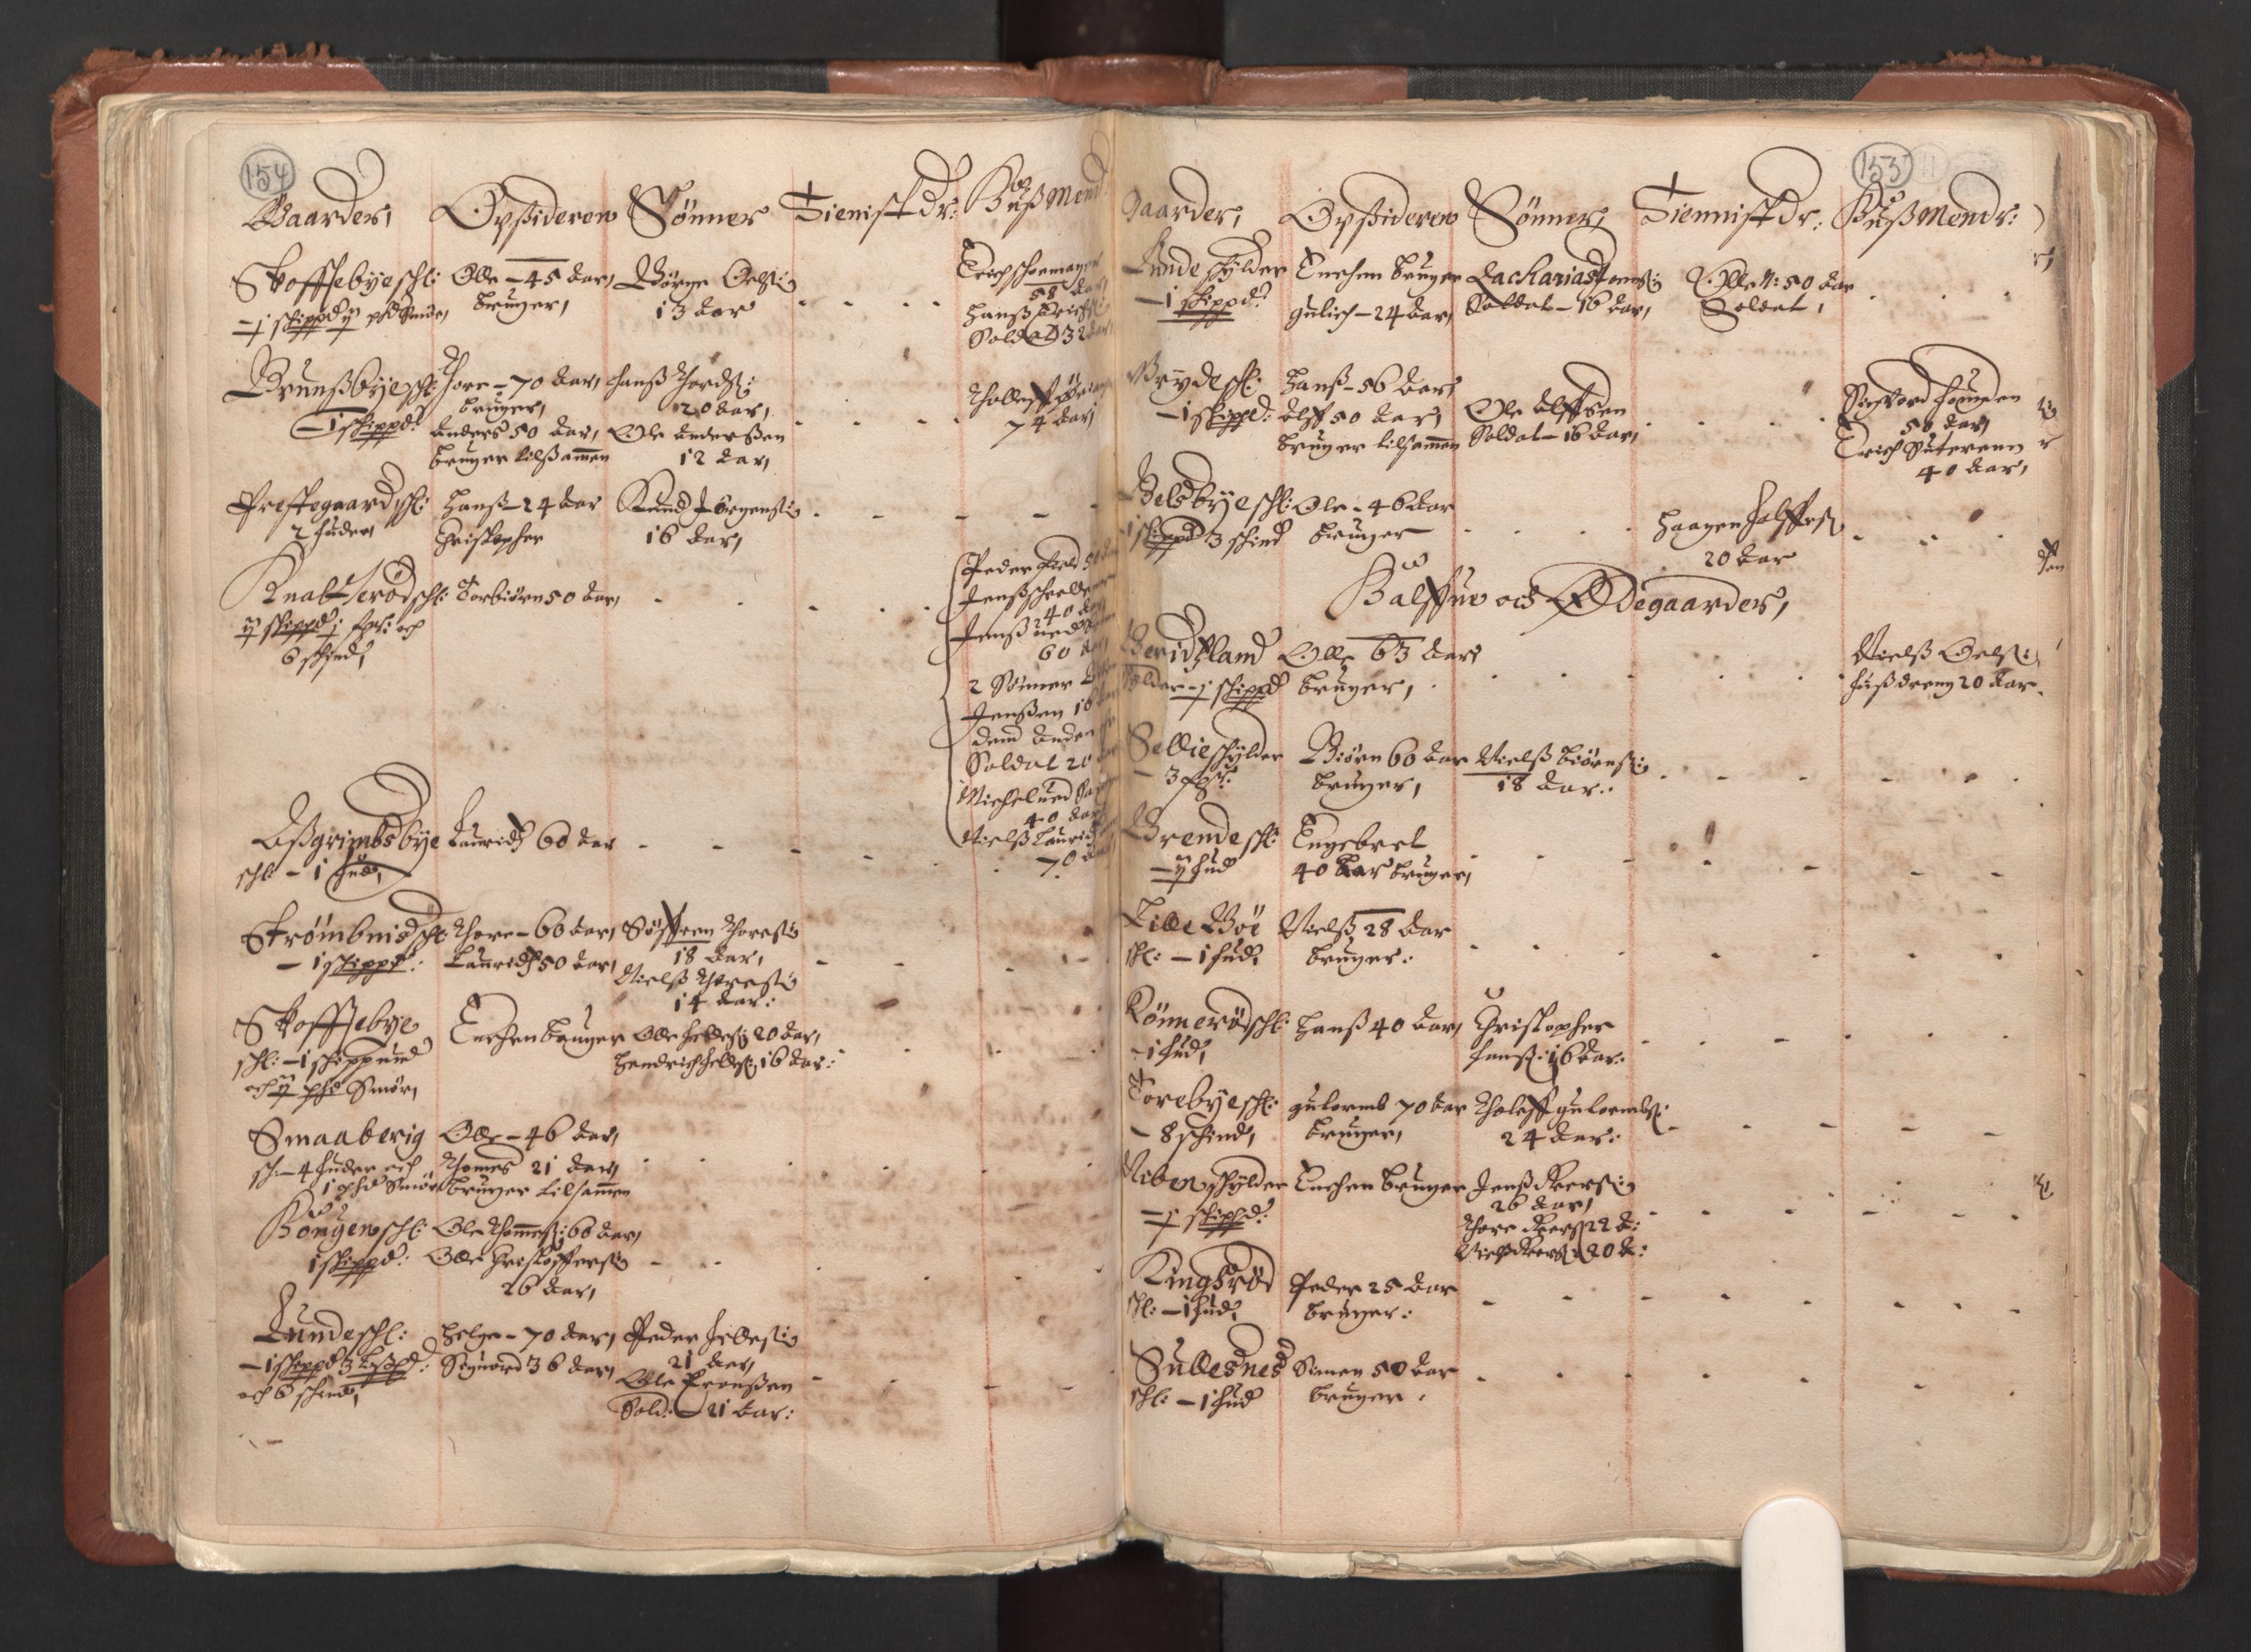 RA, Fogdenes og sorenskrivernes manntall 1664-1666, nr. 1: Fogderier (len og skipreider) i nåværende Østfold fylke, 1664, s. 154-155